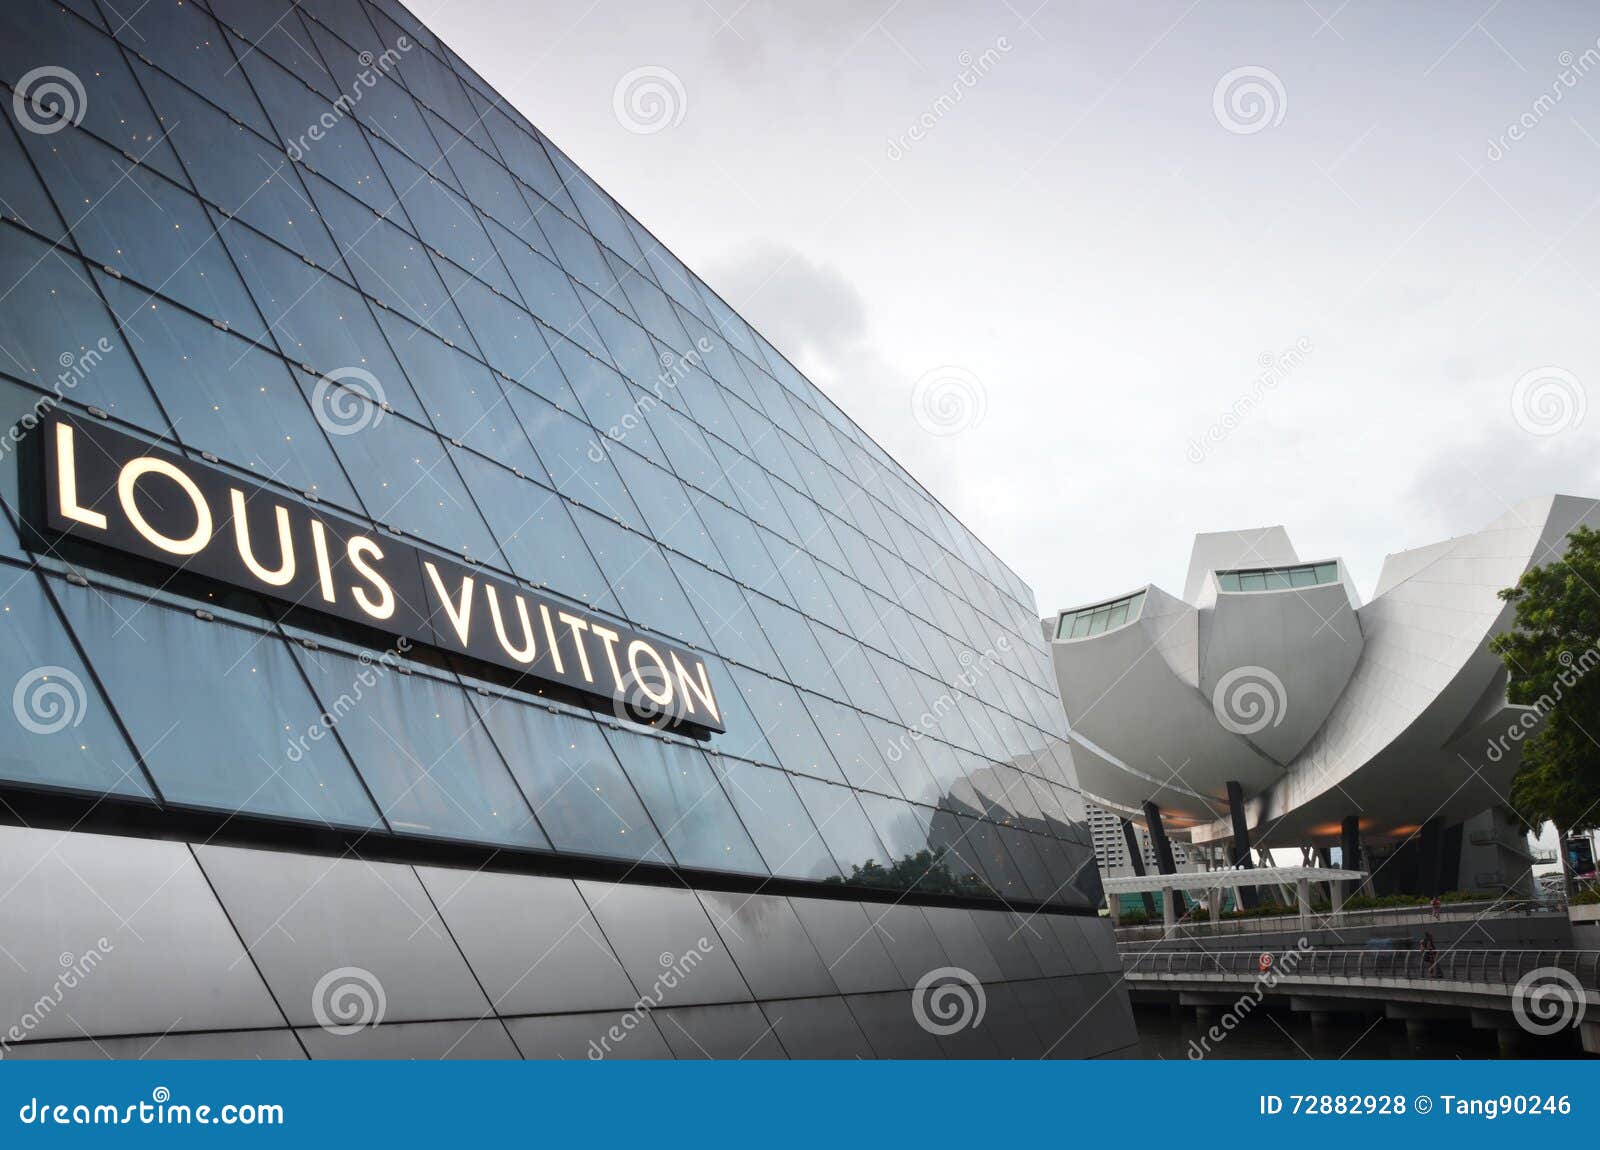 Louis Vuitton Corporate Office & Headquarters